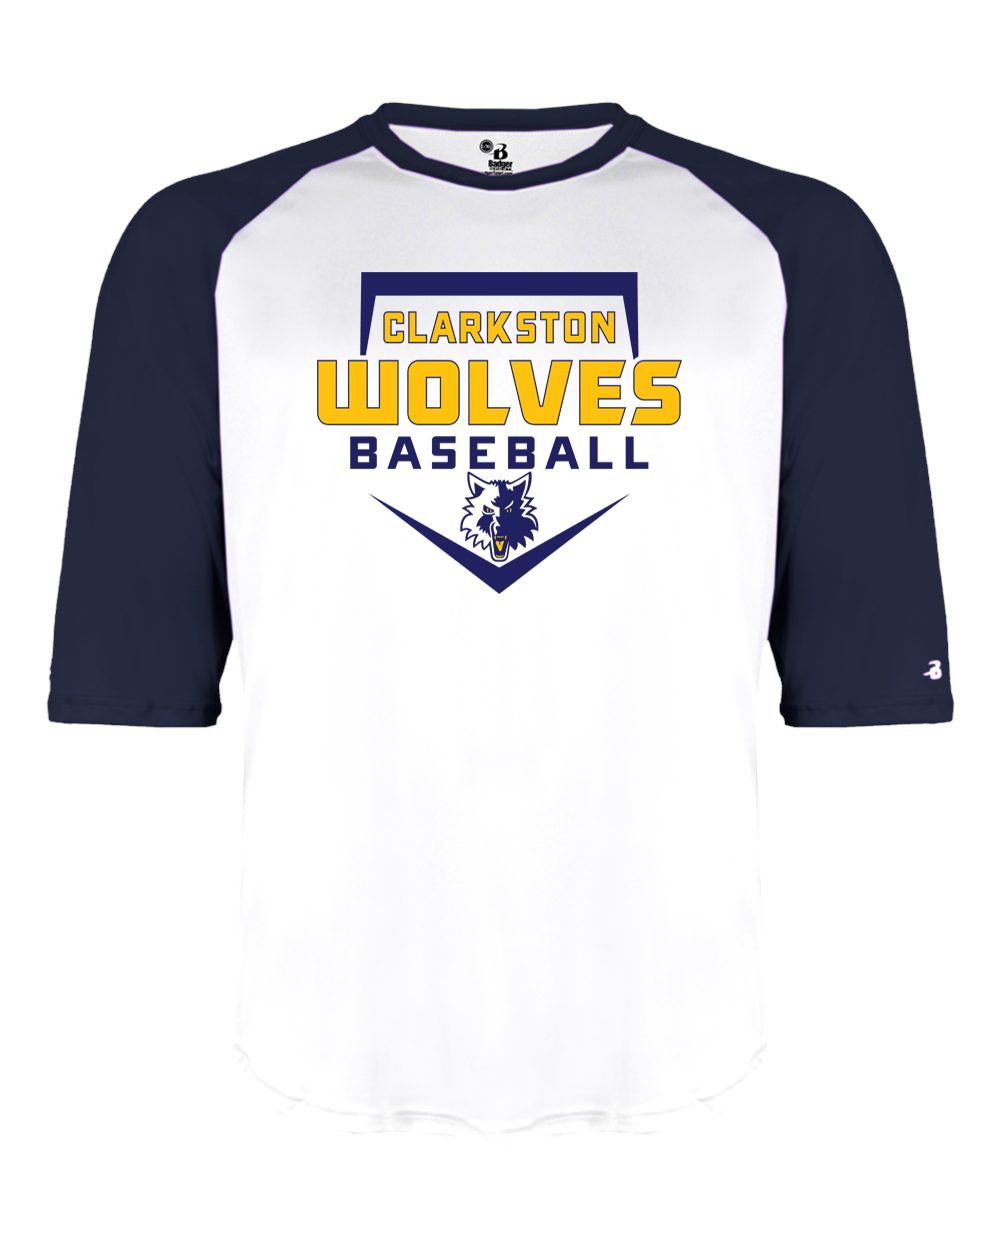 3/4 Sleeve, Baseball Undershirt - Performance Fabric